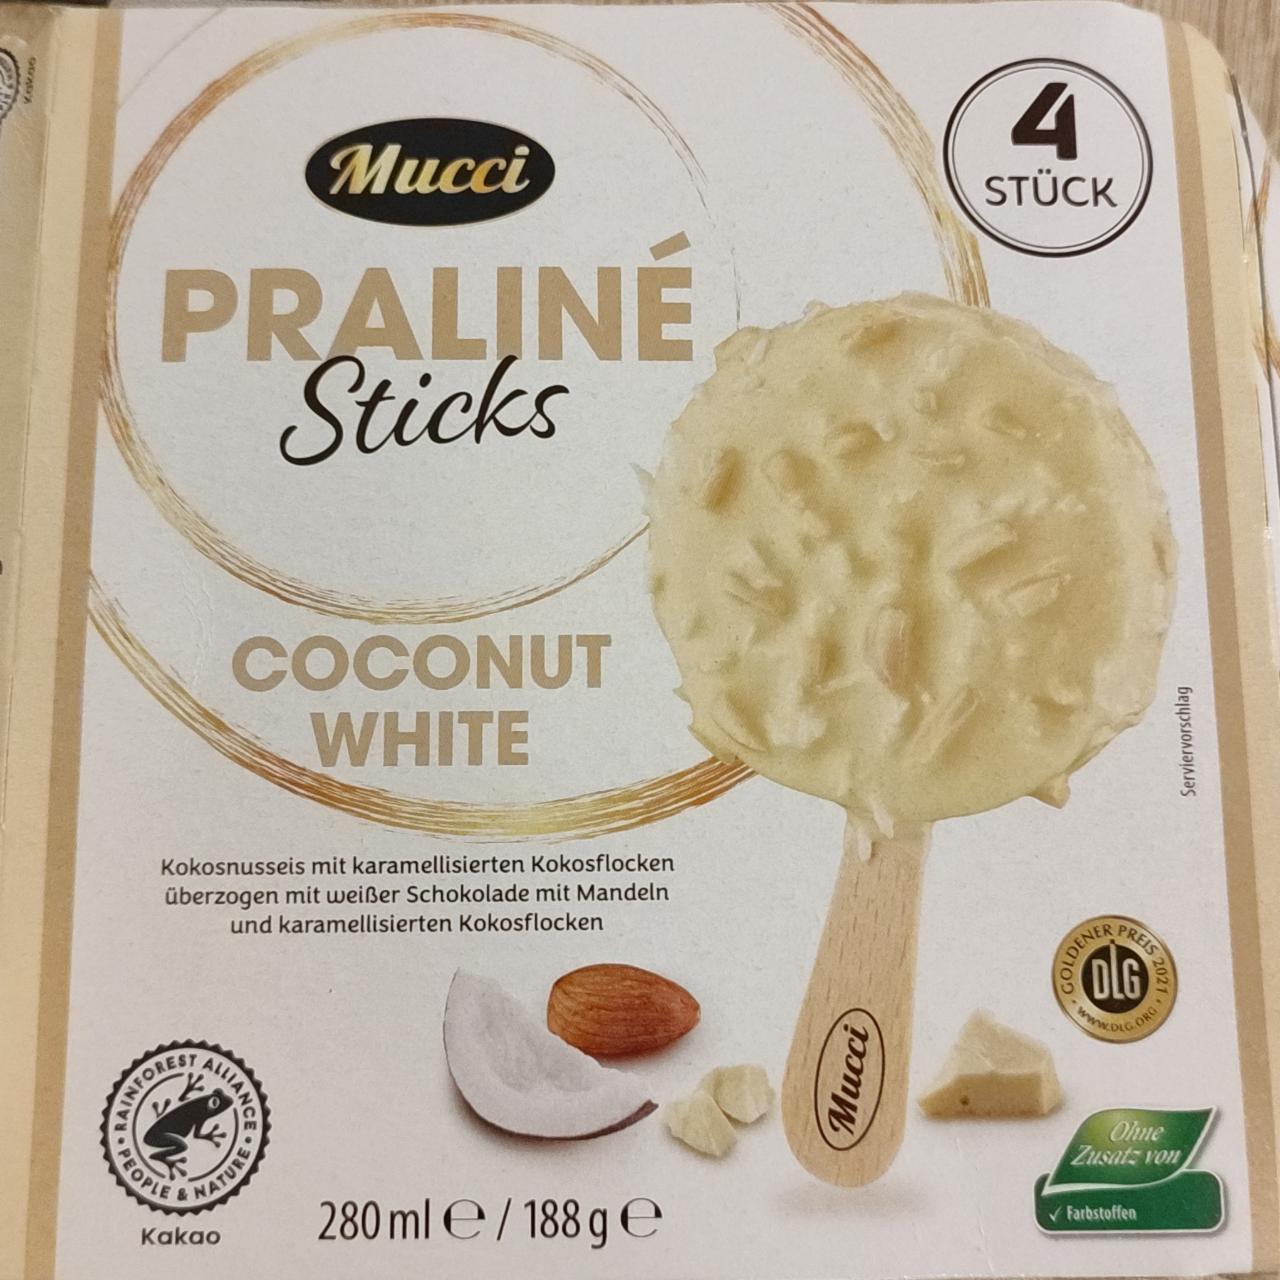 Фото - Морозиво Praline Sticks Coconut white Mucci